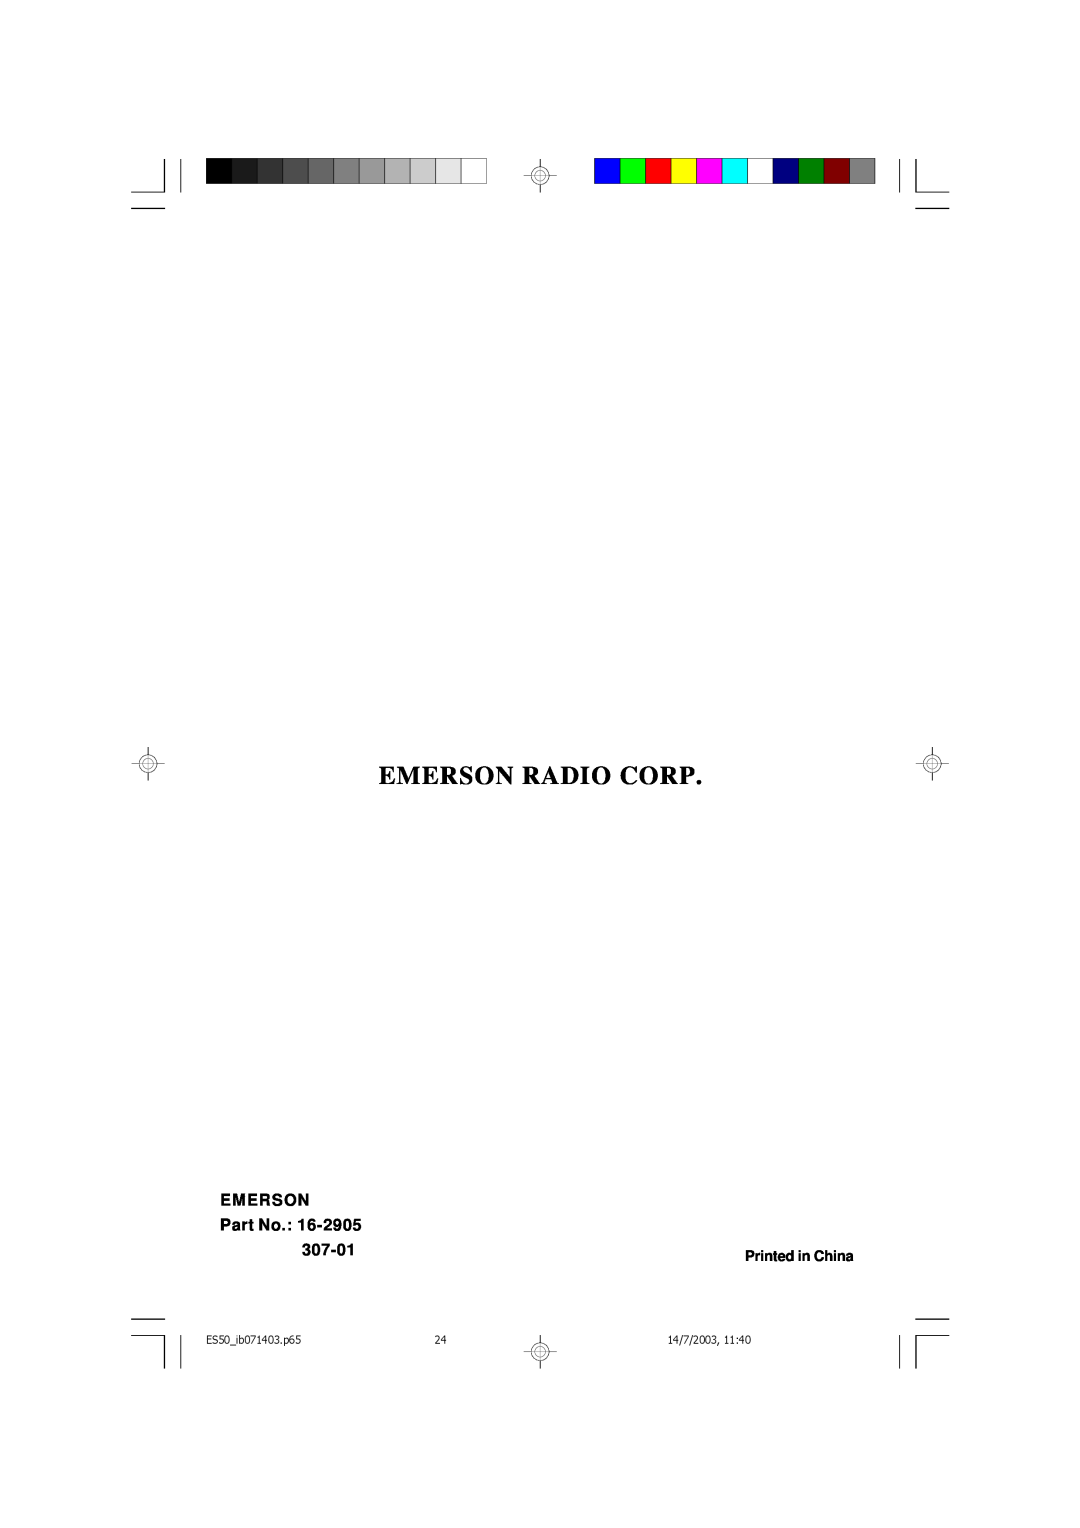 Emerson owner manual Emerson Radio Corp, EMERSON Part No, 307-01, ES50 ib071403.p65, 14/7/2003, 11 